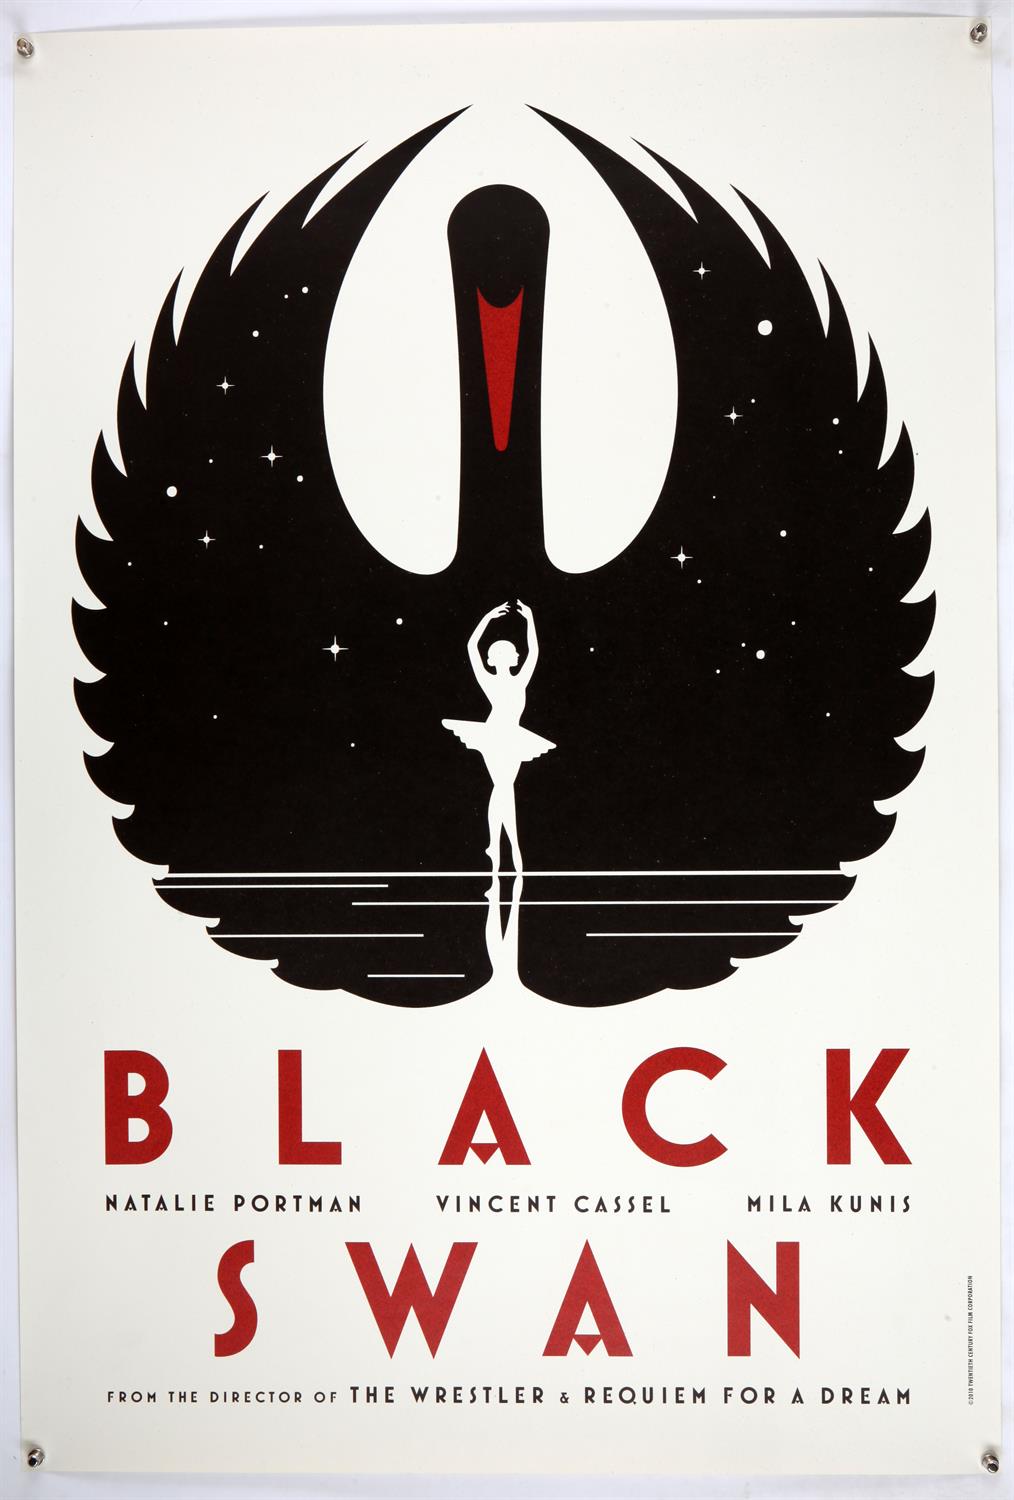 Black Swan (2010) Four Advance One Sheet film posters by the London design firm La Boca,